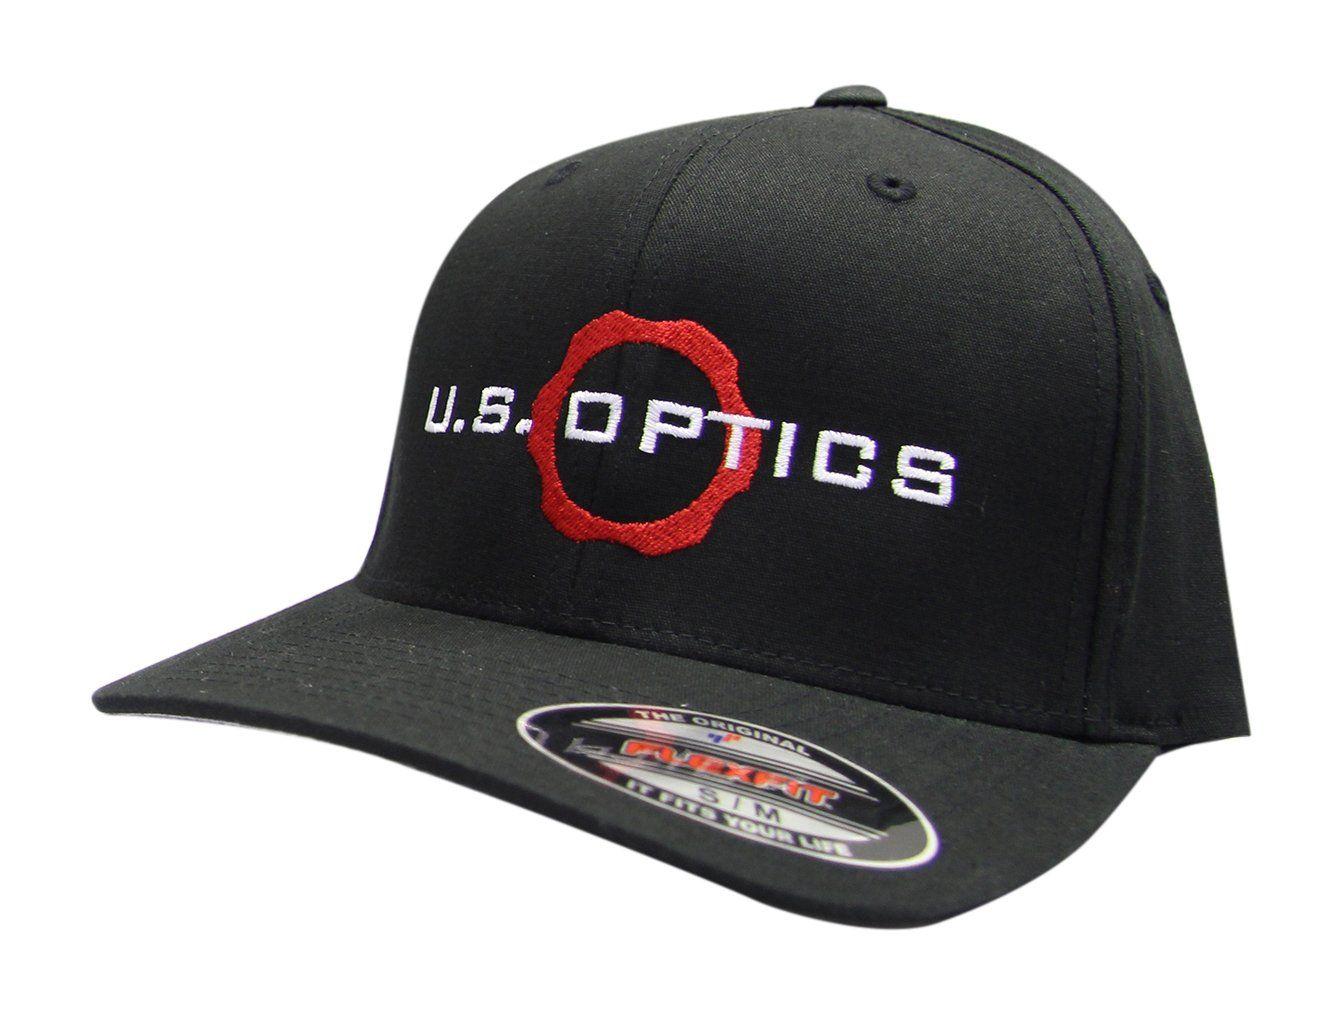 US Optics Logo - Amazon.com: US Optics Men's Classic Hat, Black, Large/X-Large ...